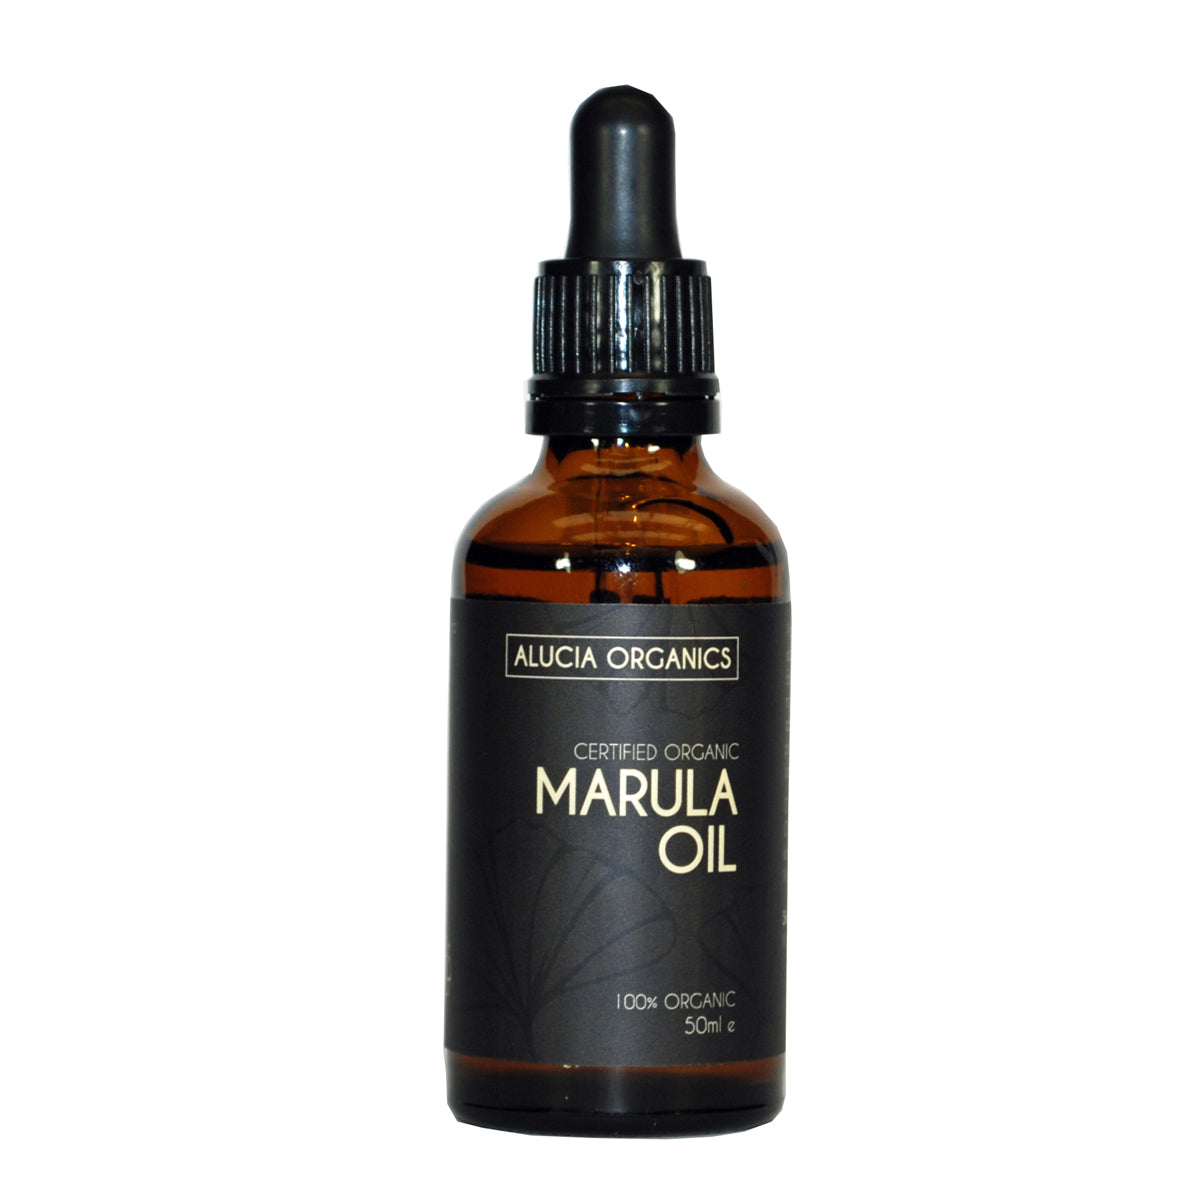 Alucia-Organics-Certified-Organic-Marula-Oil-50ml